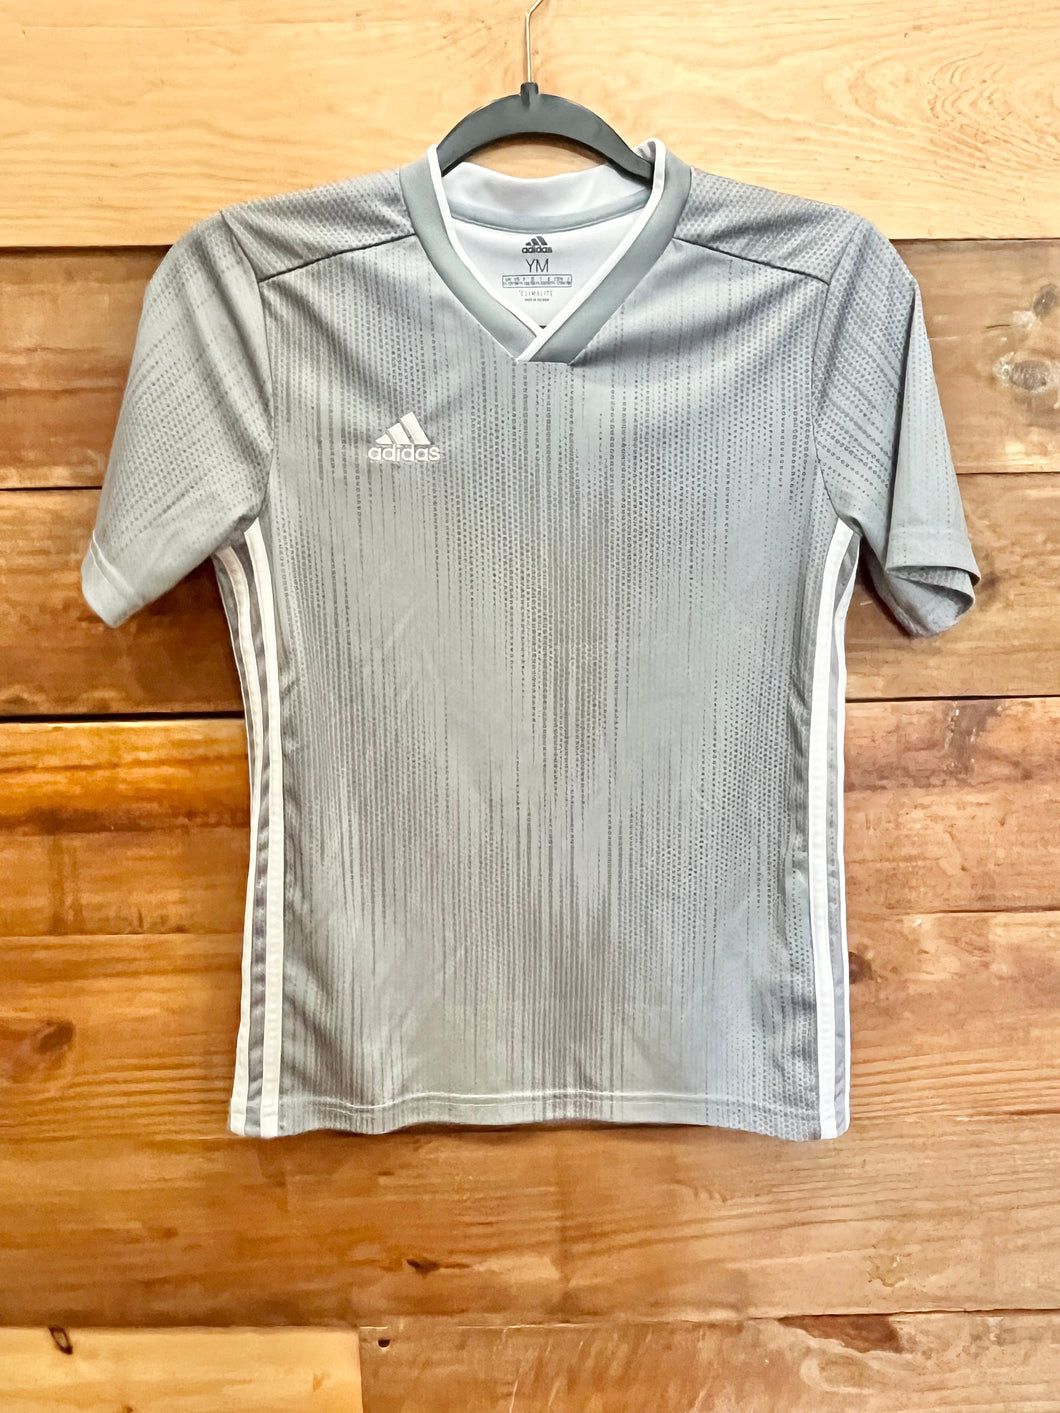 Adidas Gray Shirt Size 11